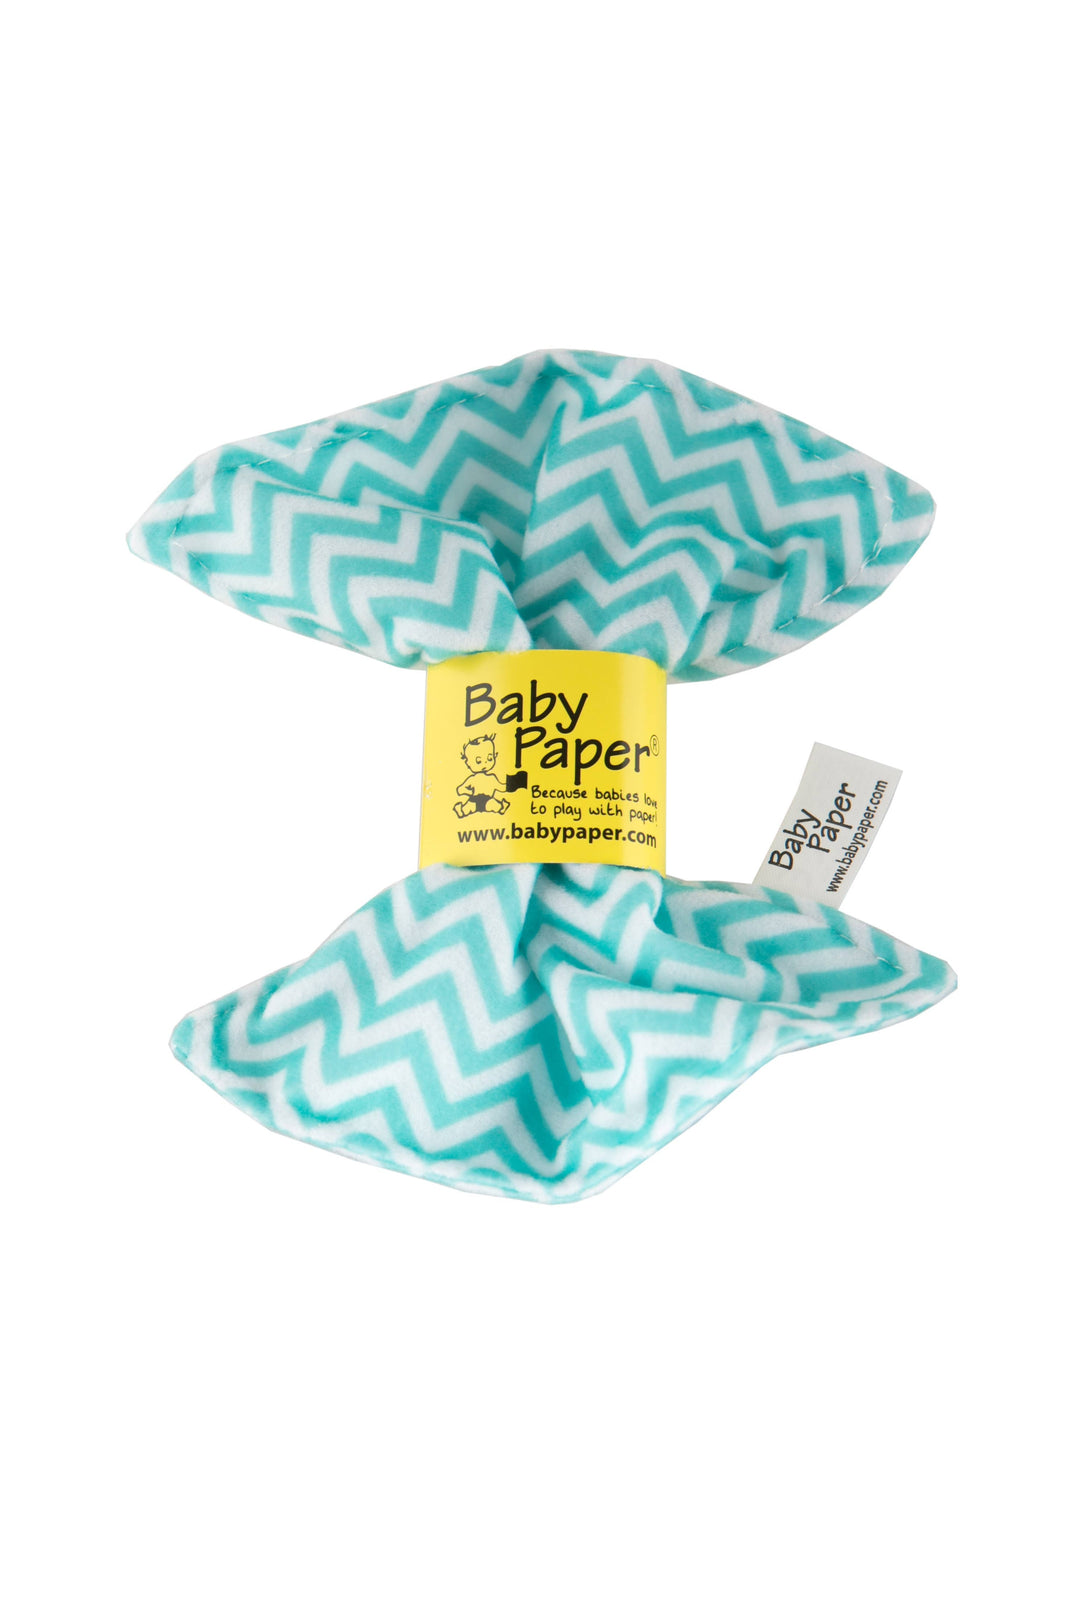 BABY PAPER - Turquoise Zig Zag Baby Paper